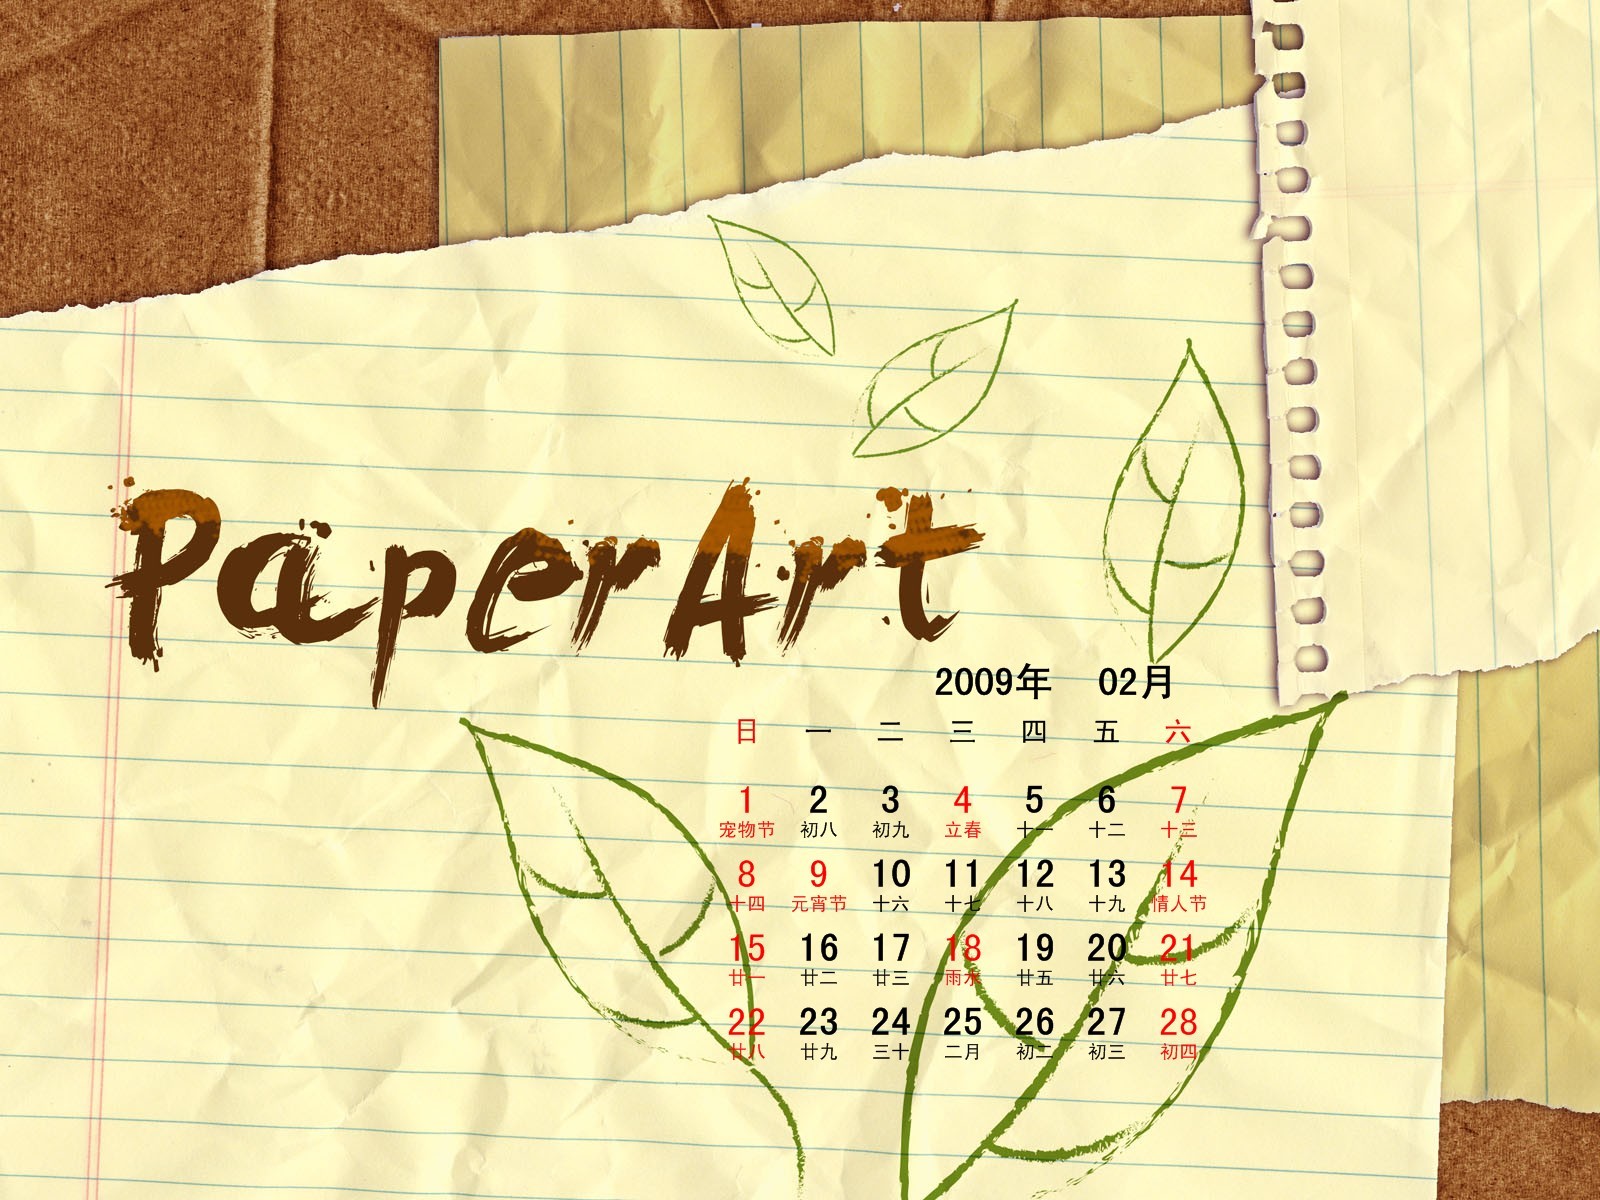 PaperArt 09 year in February calendar wallpaper #27 - 1600x1200